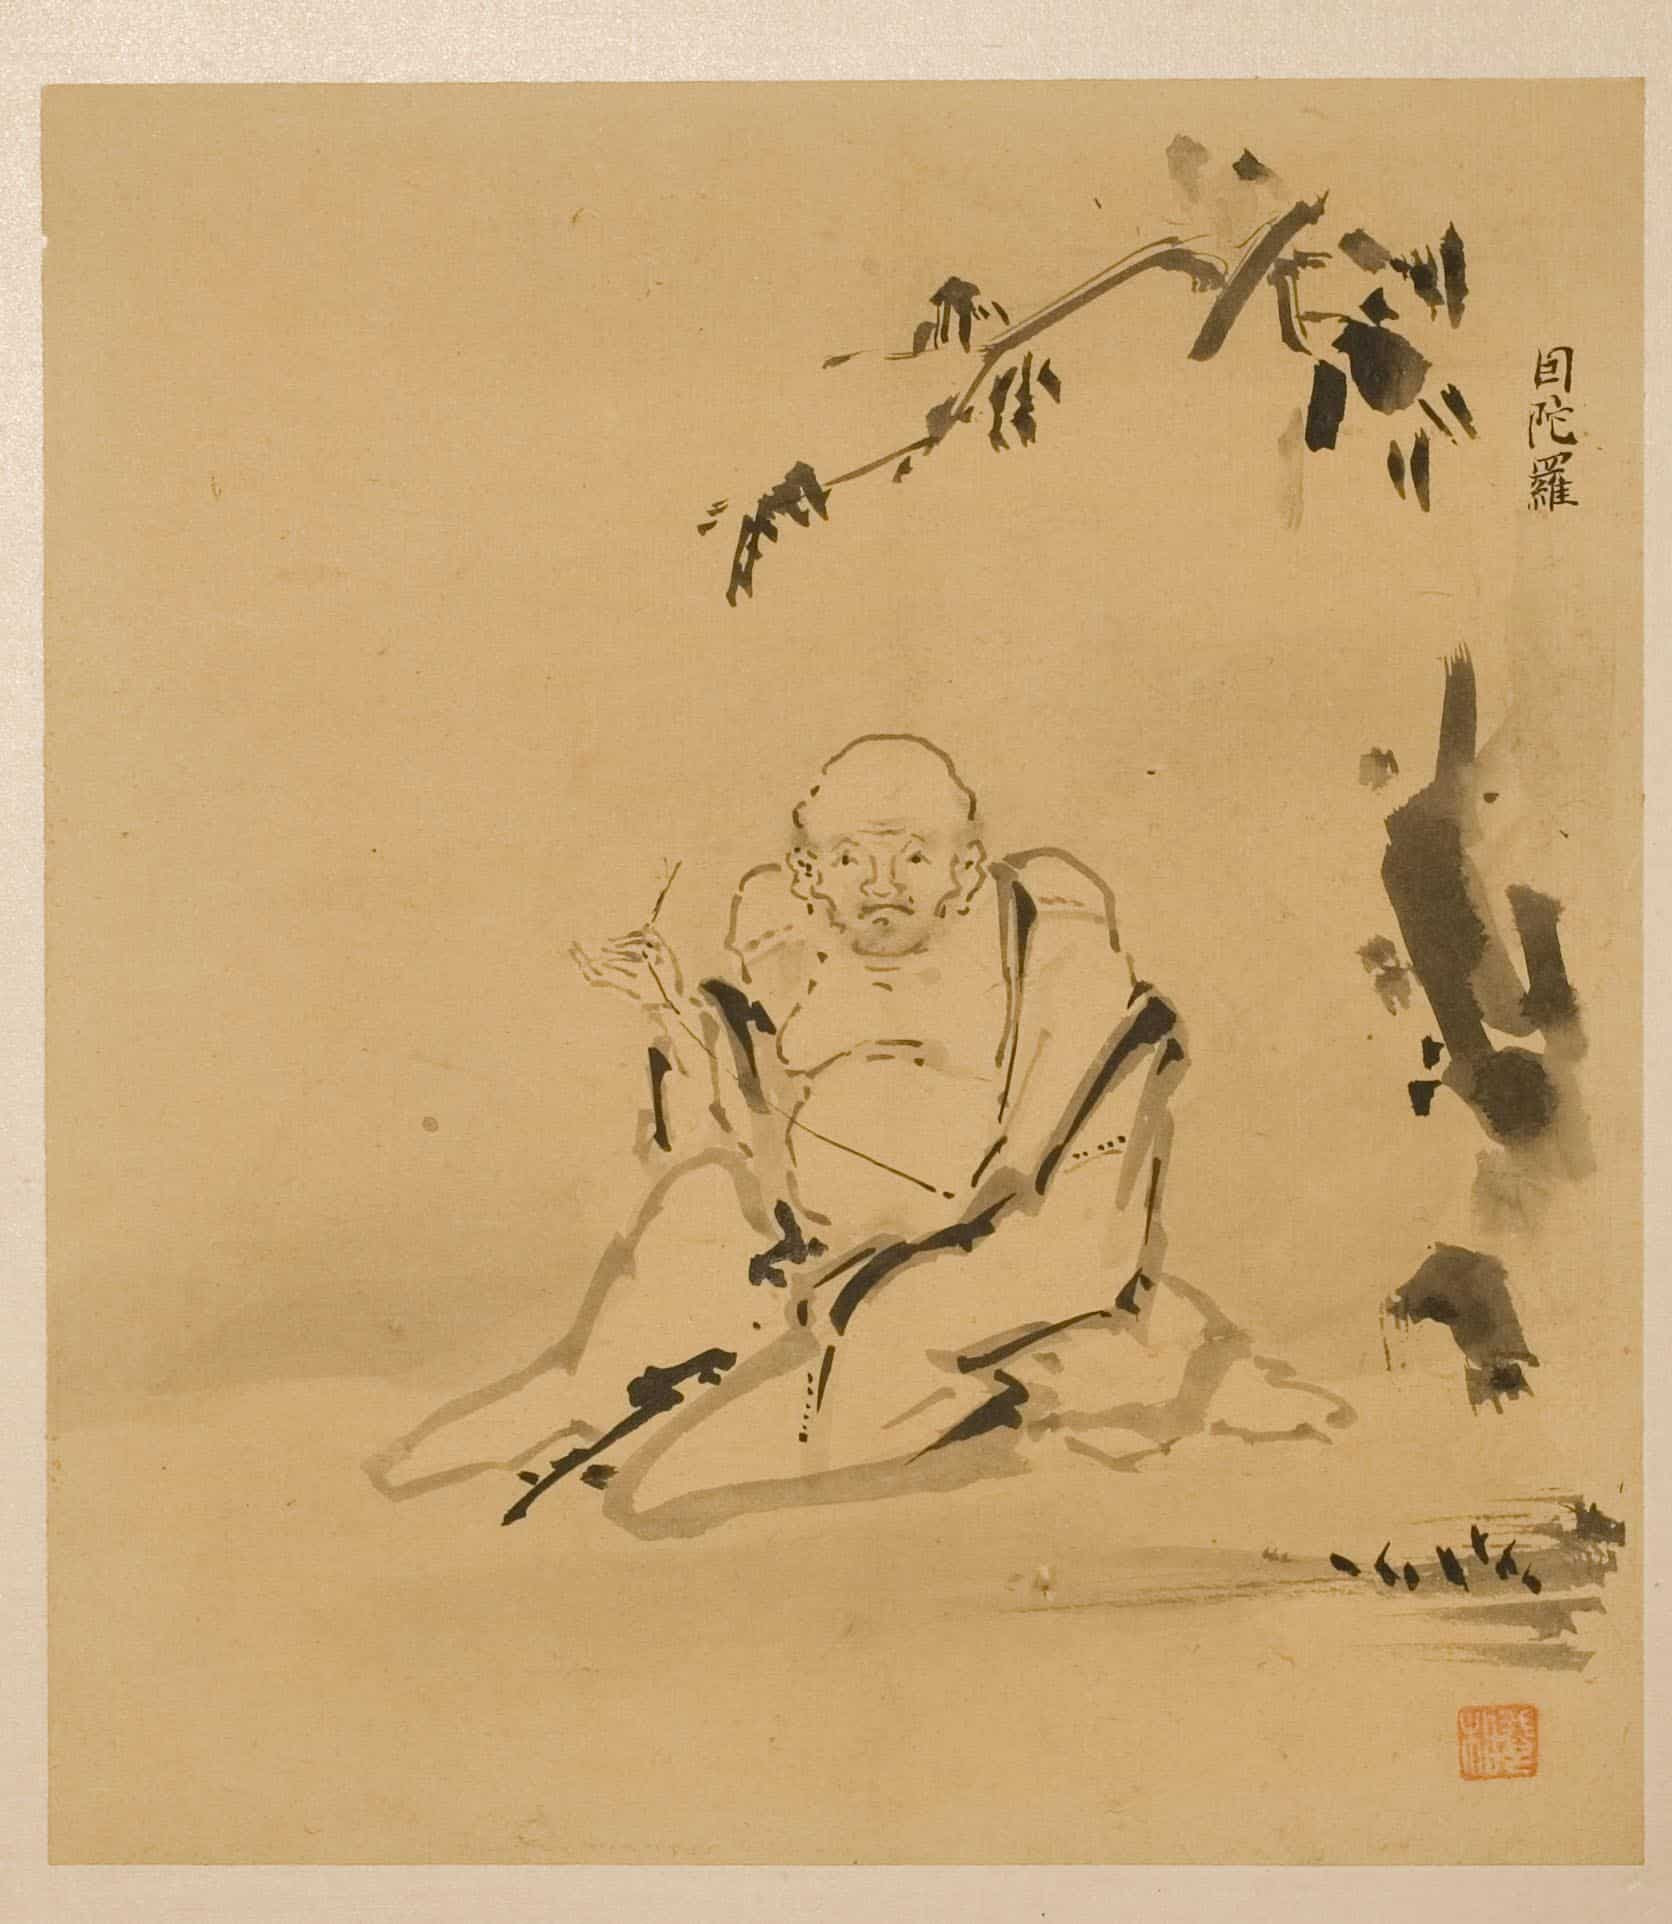 an image of Buddhist artwork